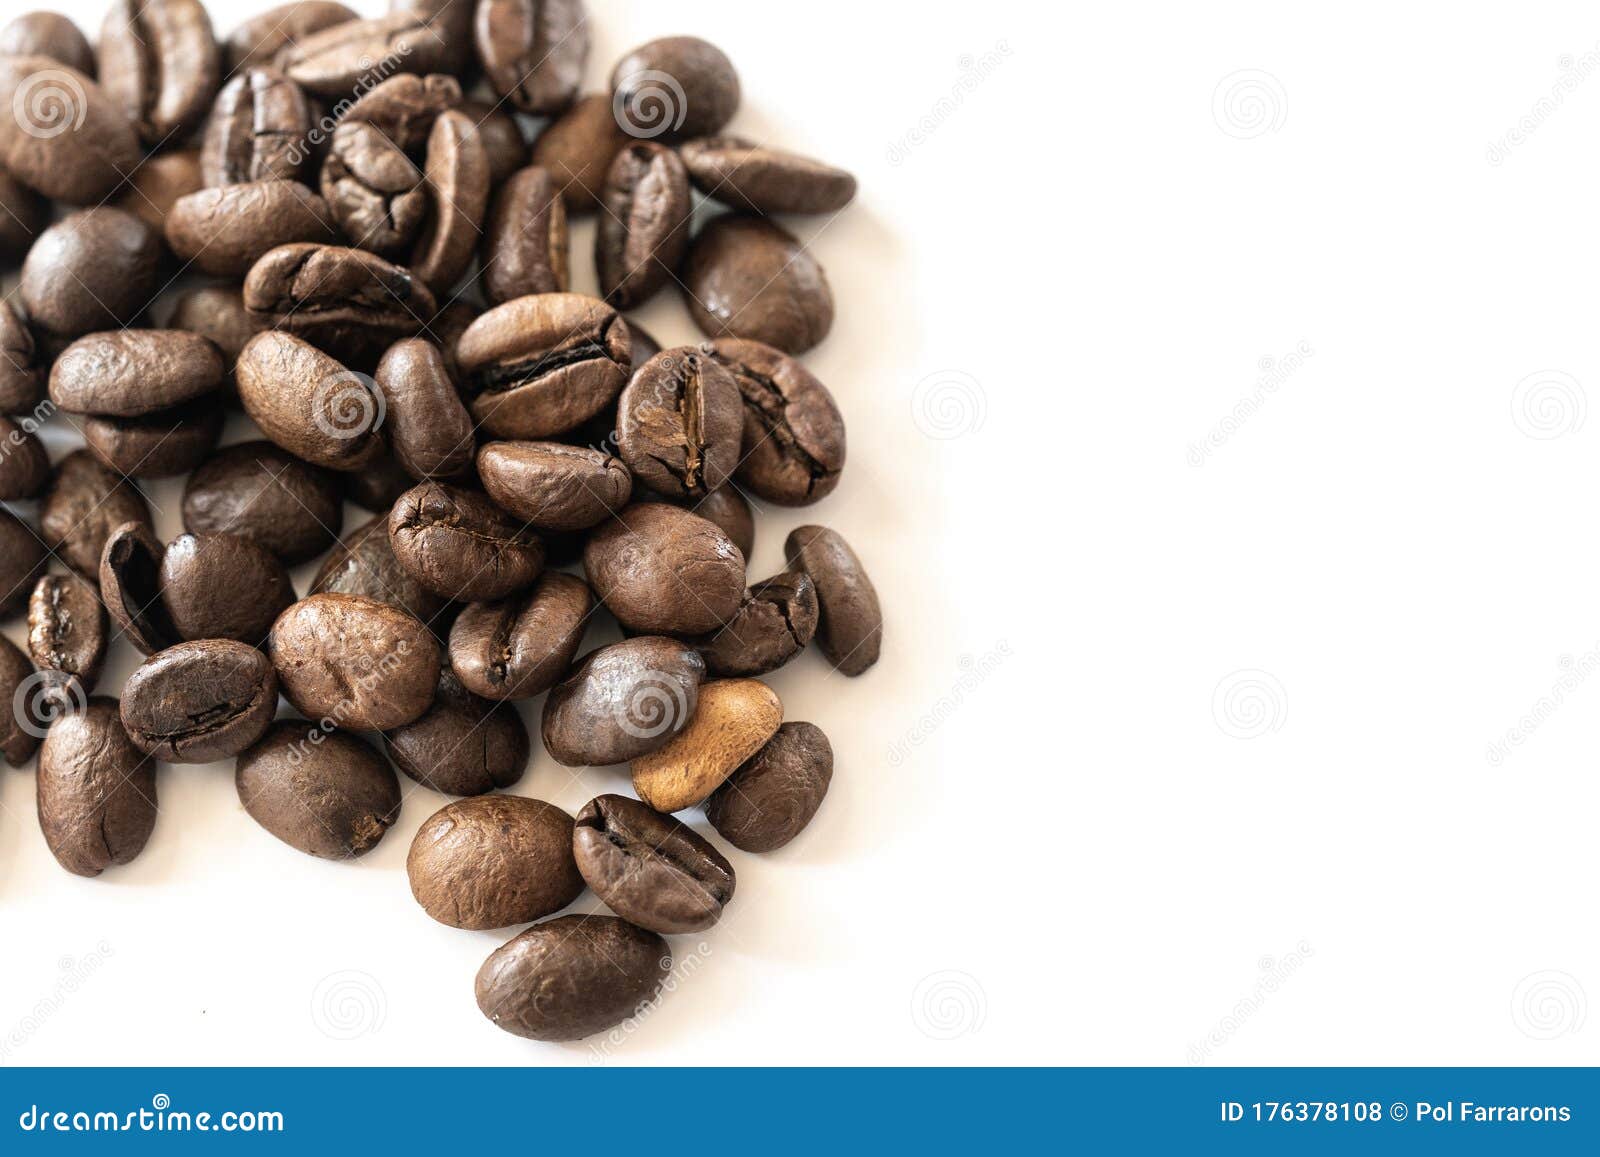 granos de cafe sobre un fondo blanco